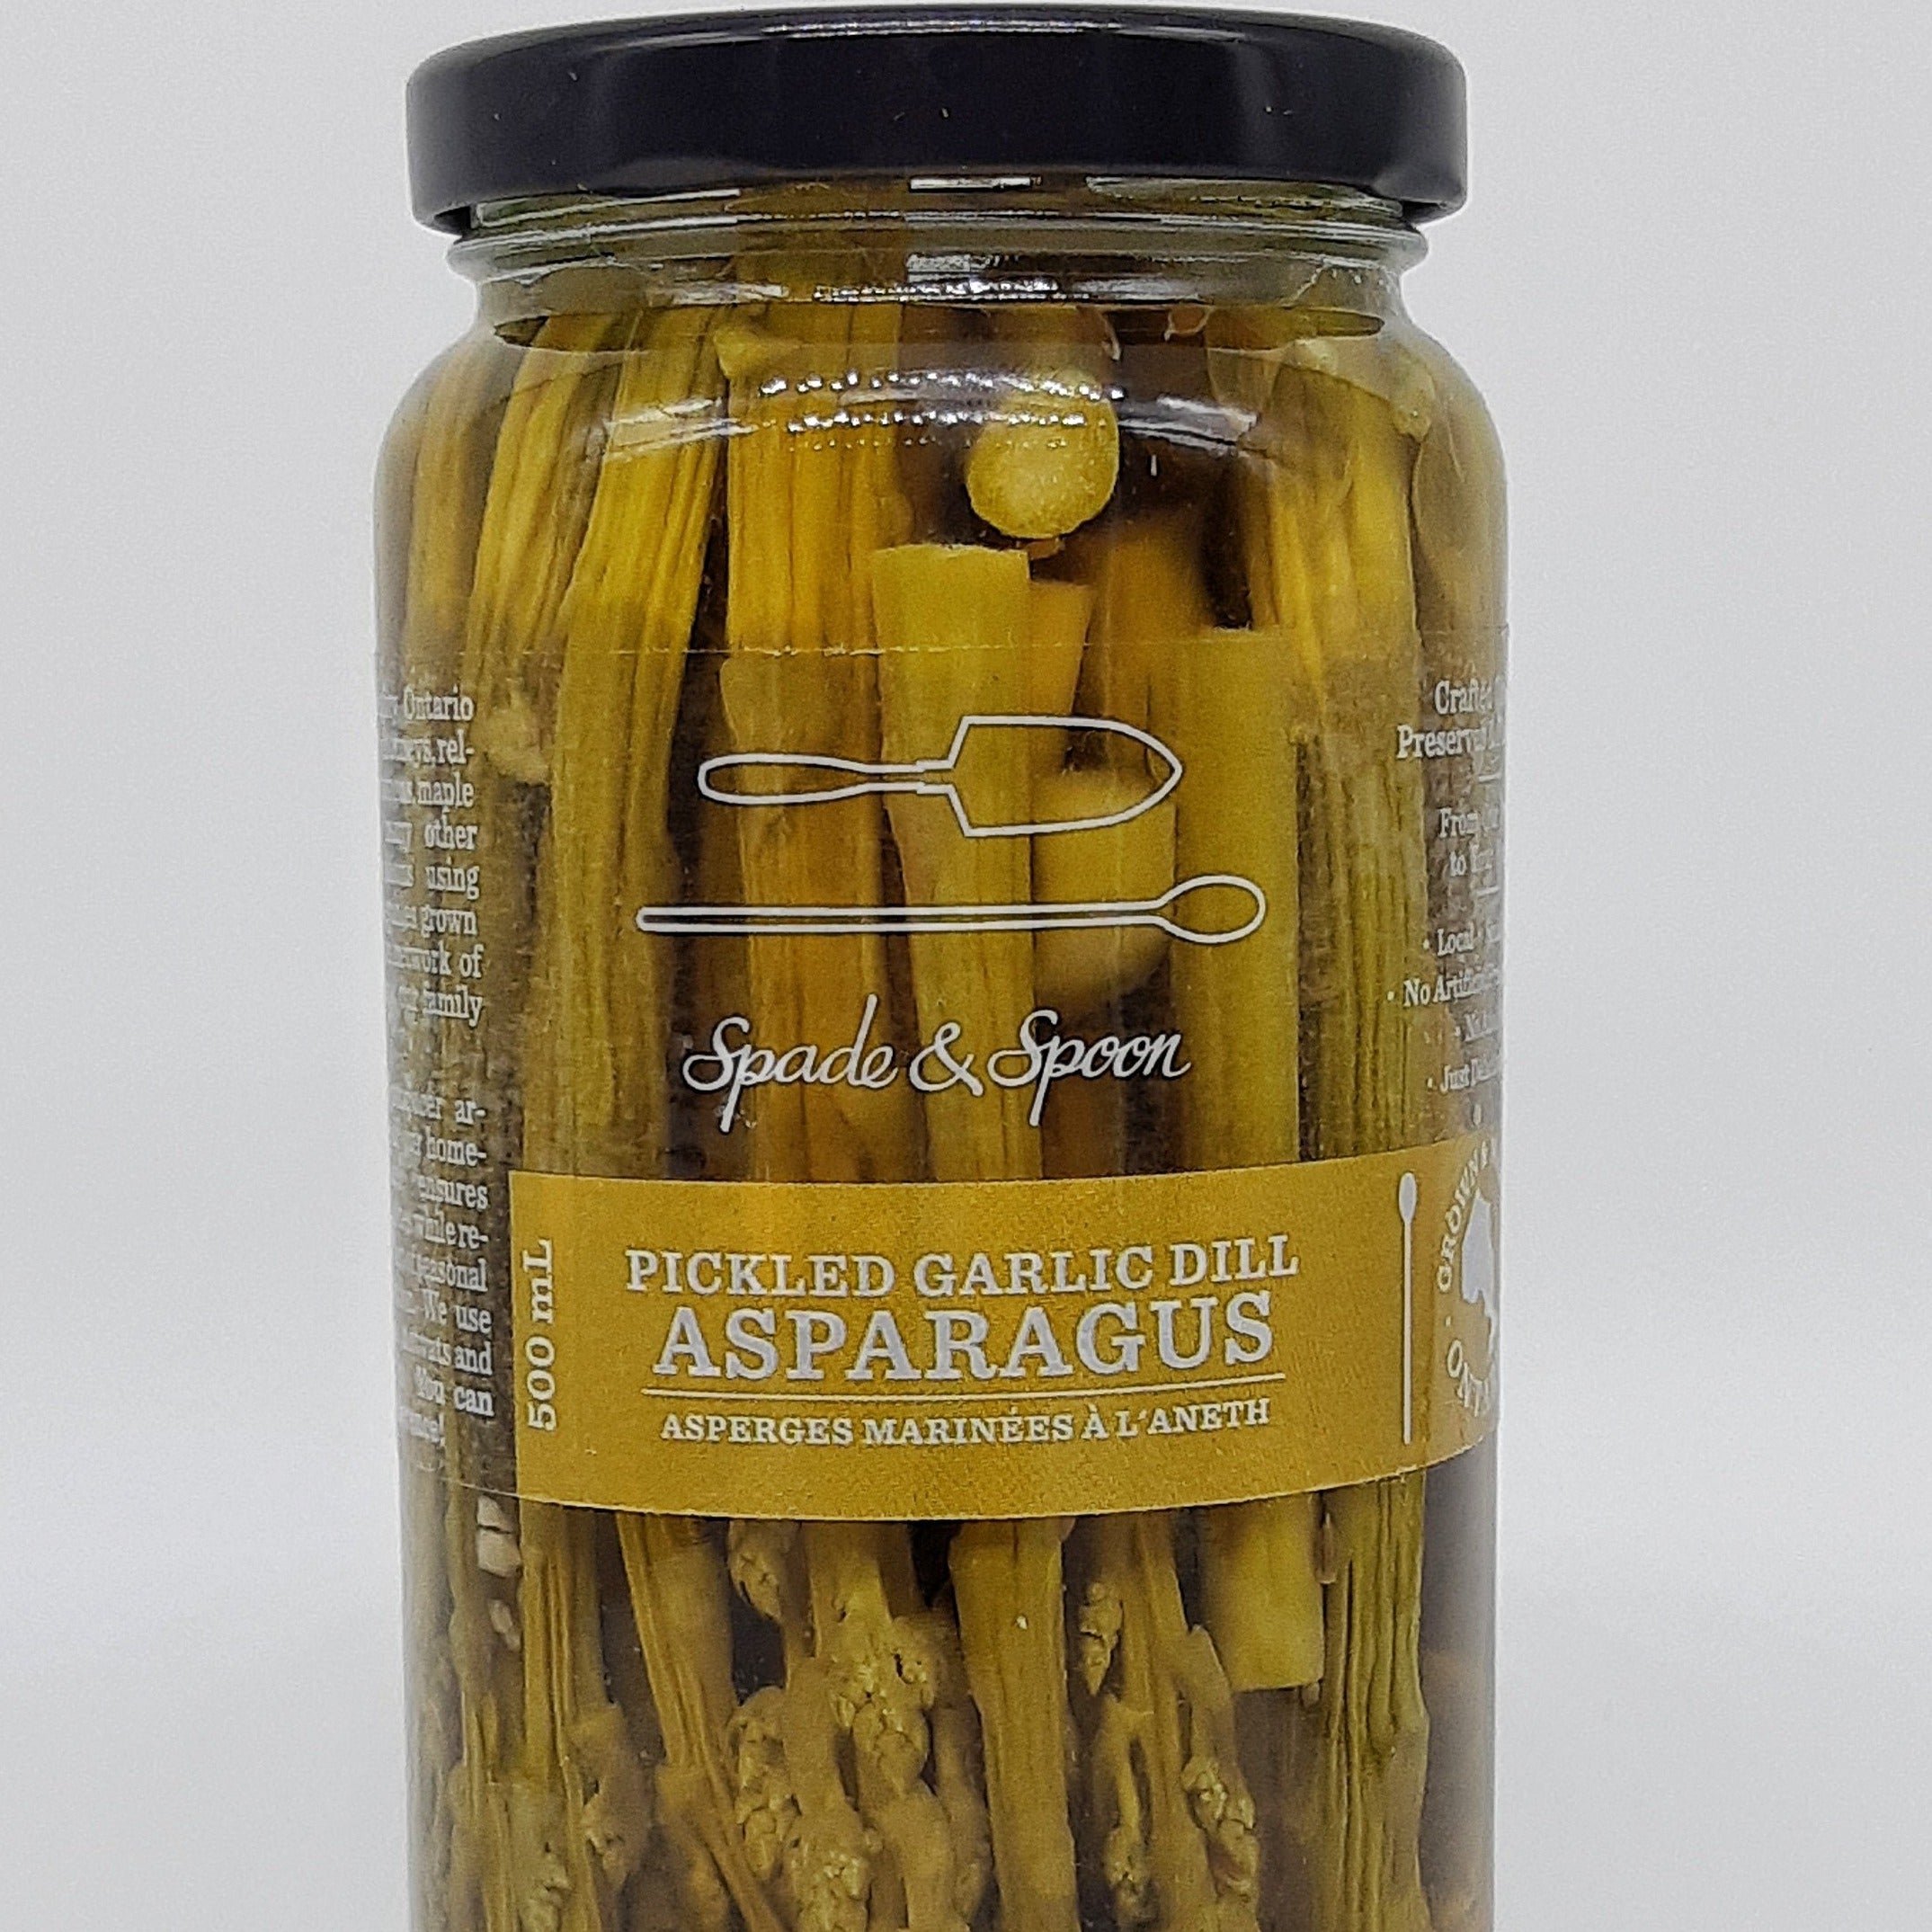 Jar of Pickled Garlic Dill Asparagus